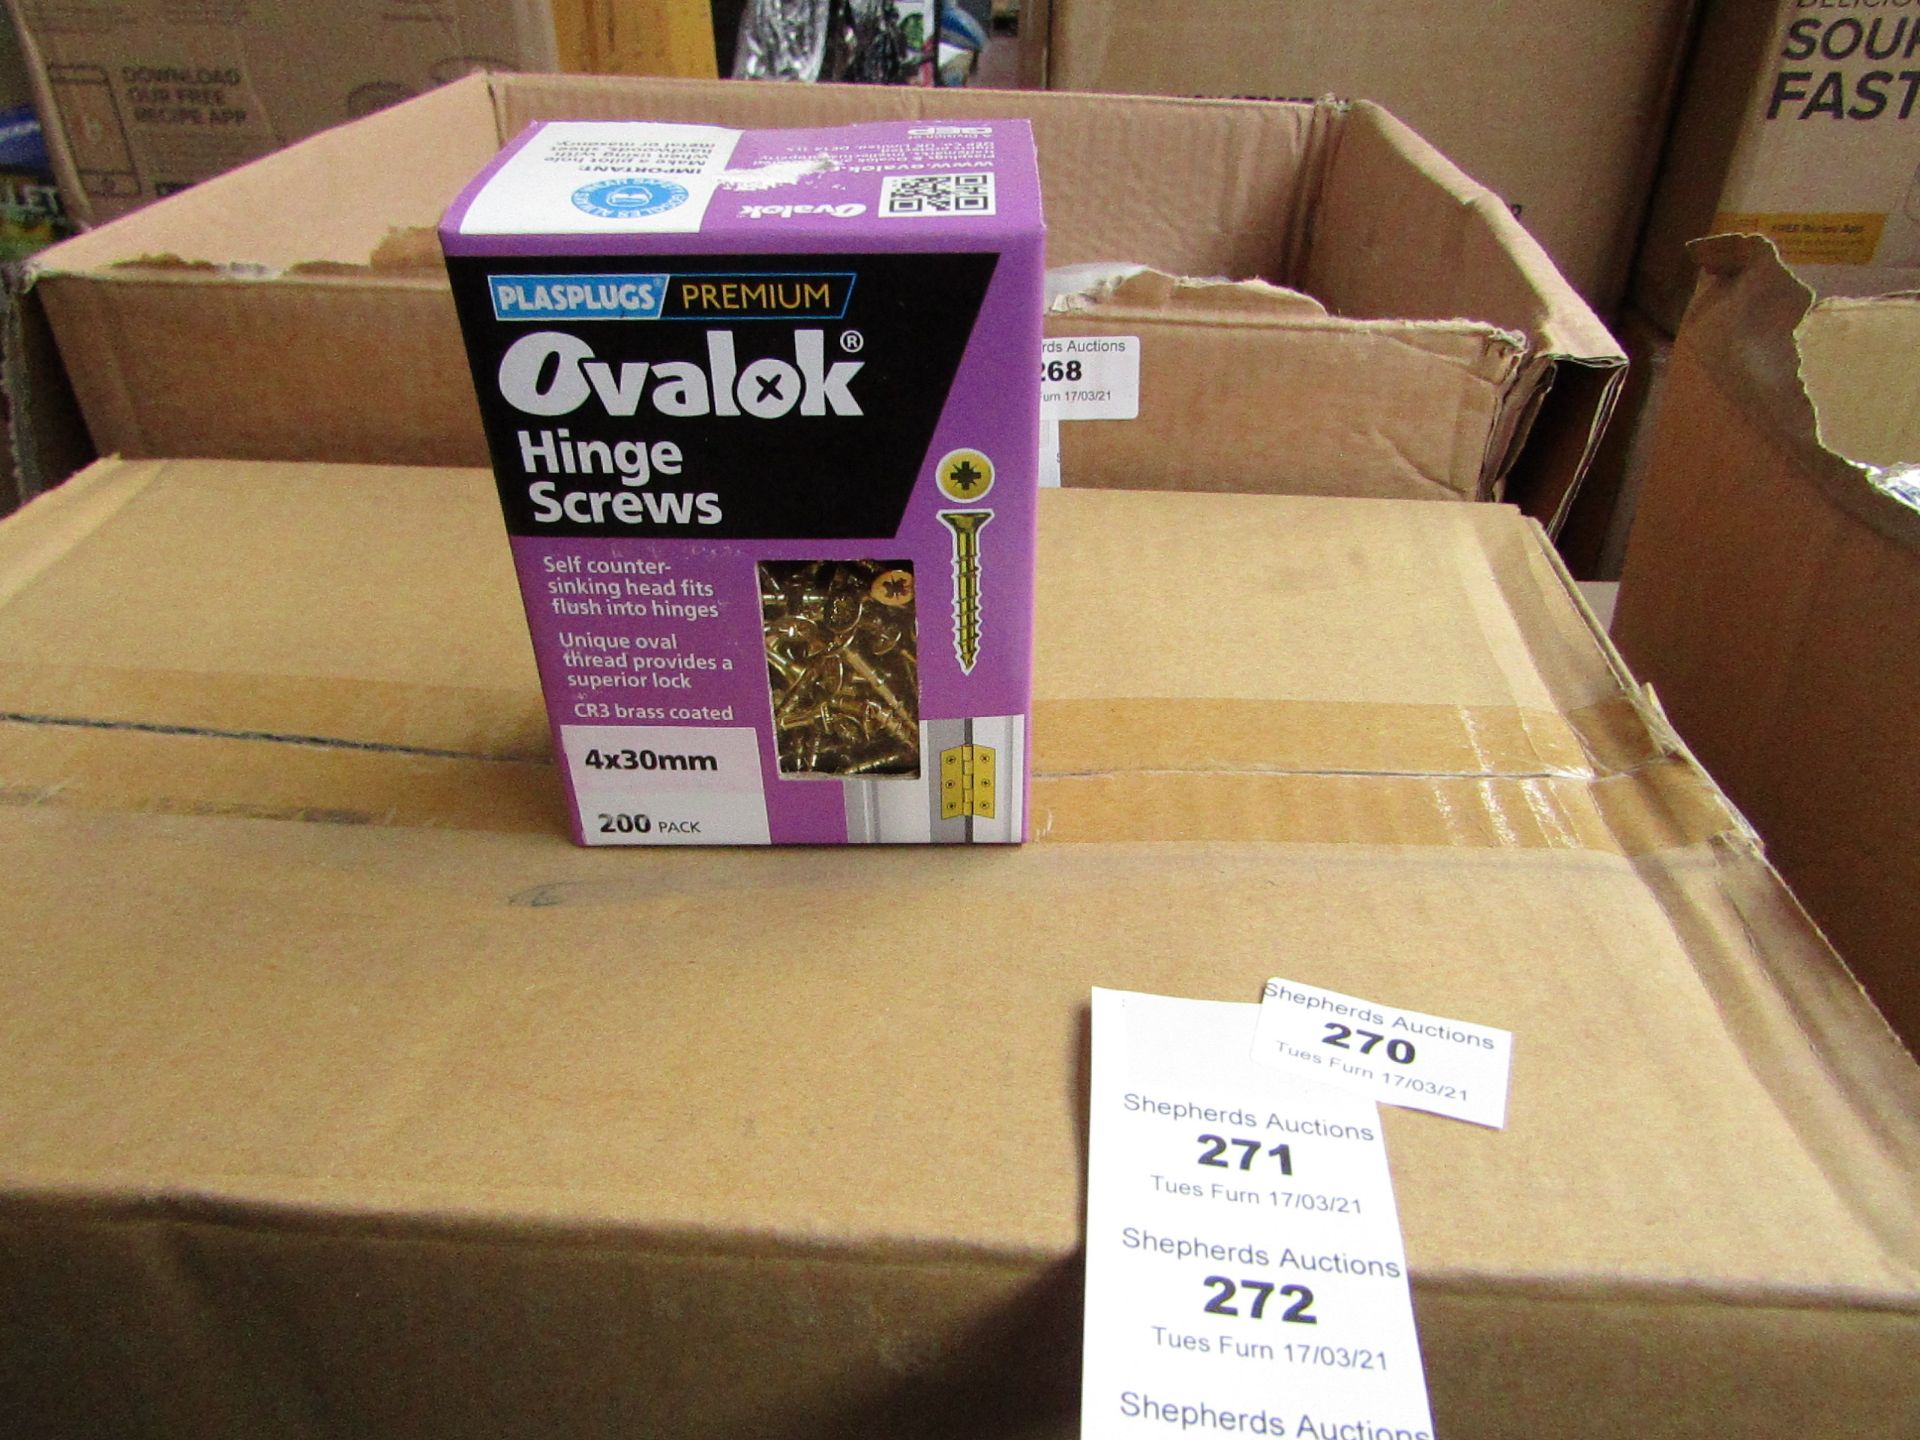 2x Boxes of 200, 4x30mm Plasplugs premium Ovalok Hinge screws - New.